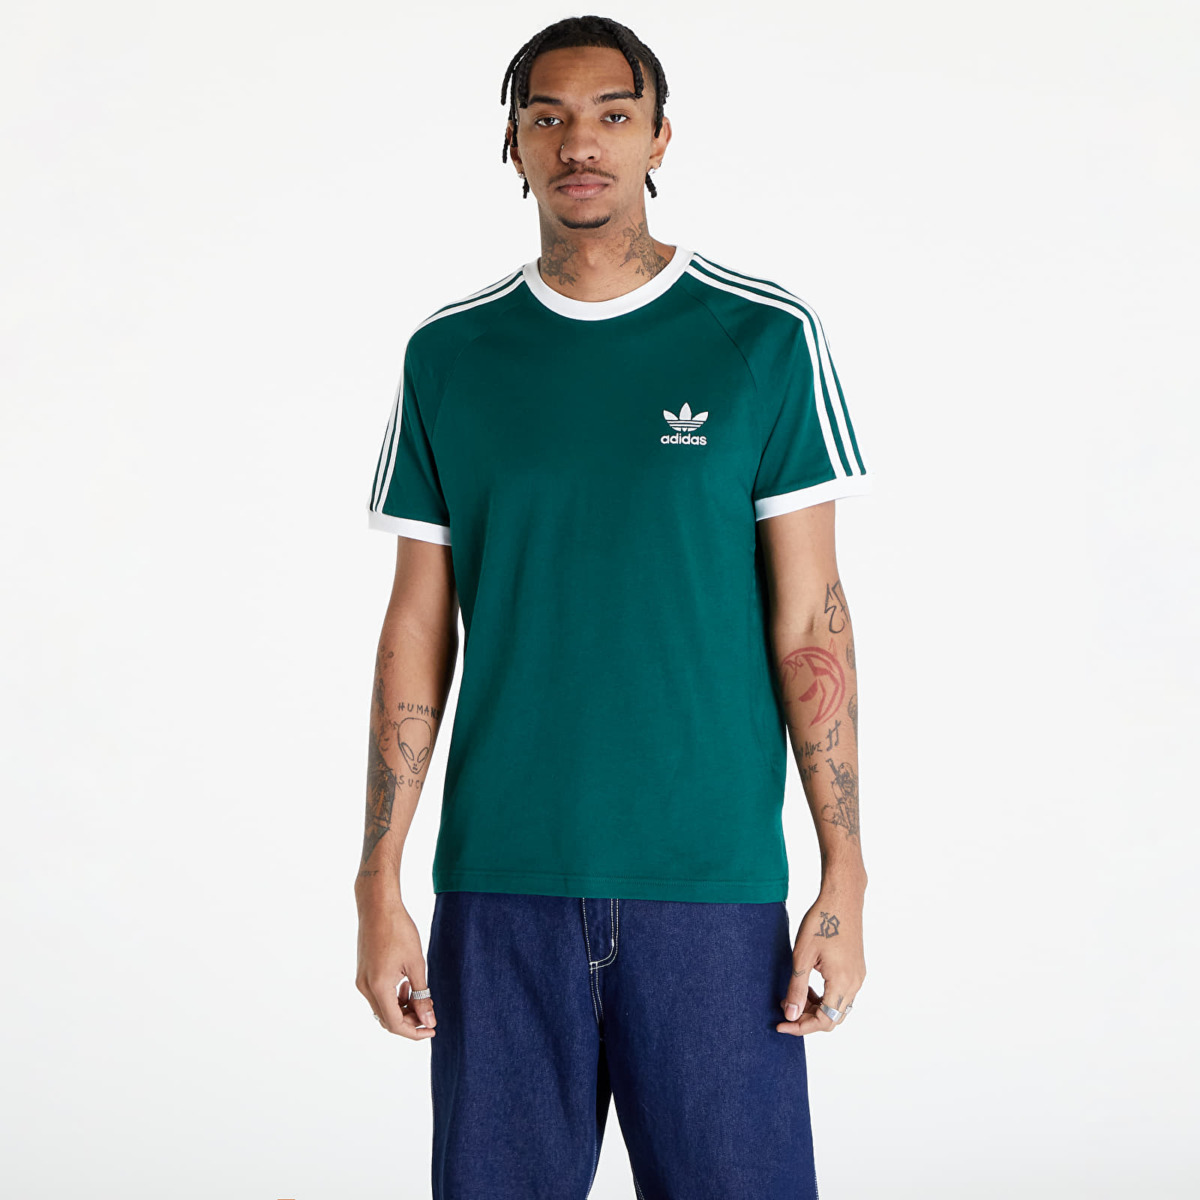 Adidas - Green Top for Men from Footshop GOOFASH